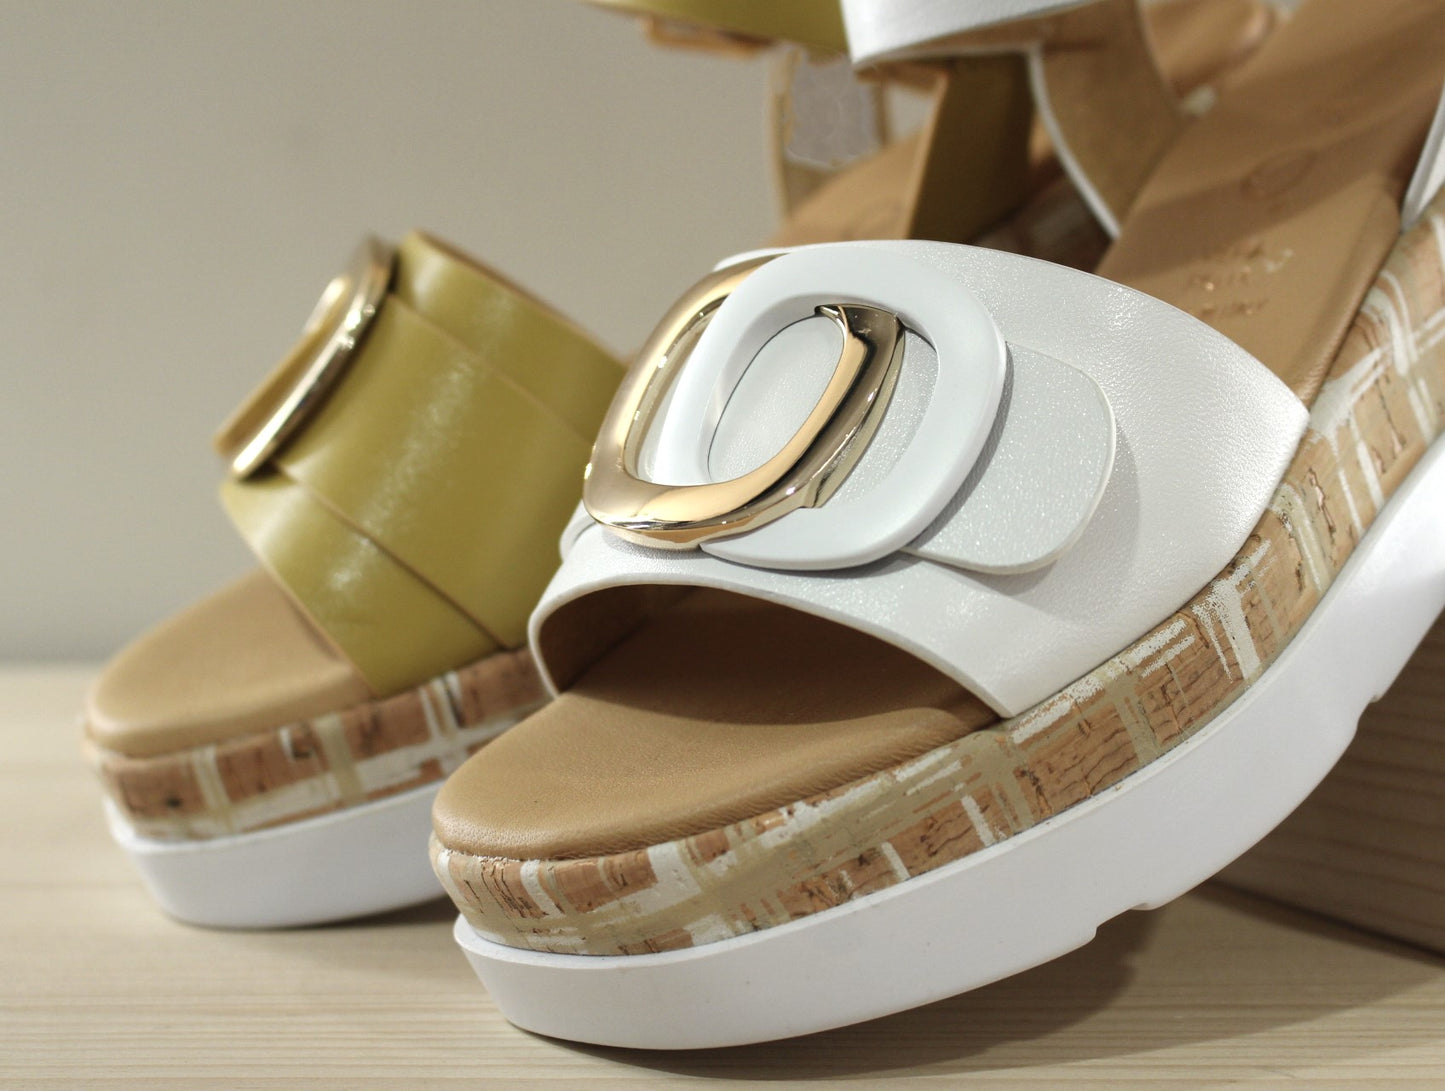 Sandale petit talon compensé fabrication italienne REPO